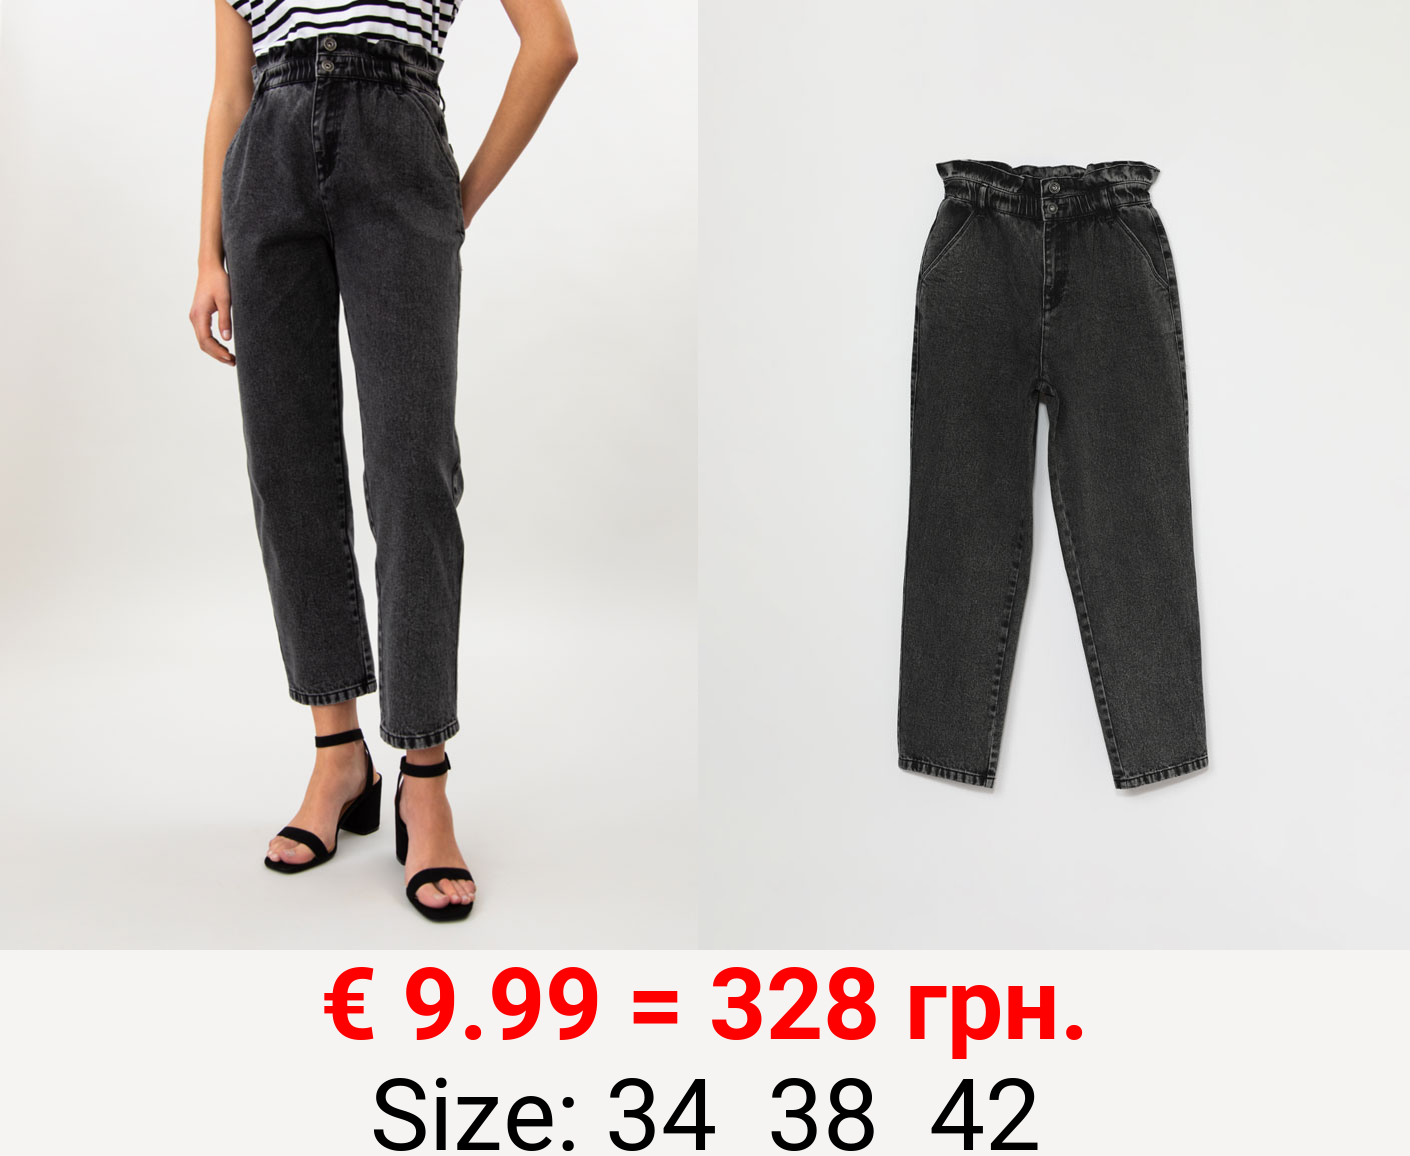 High-waist jeans with elastic